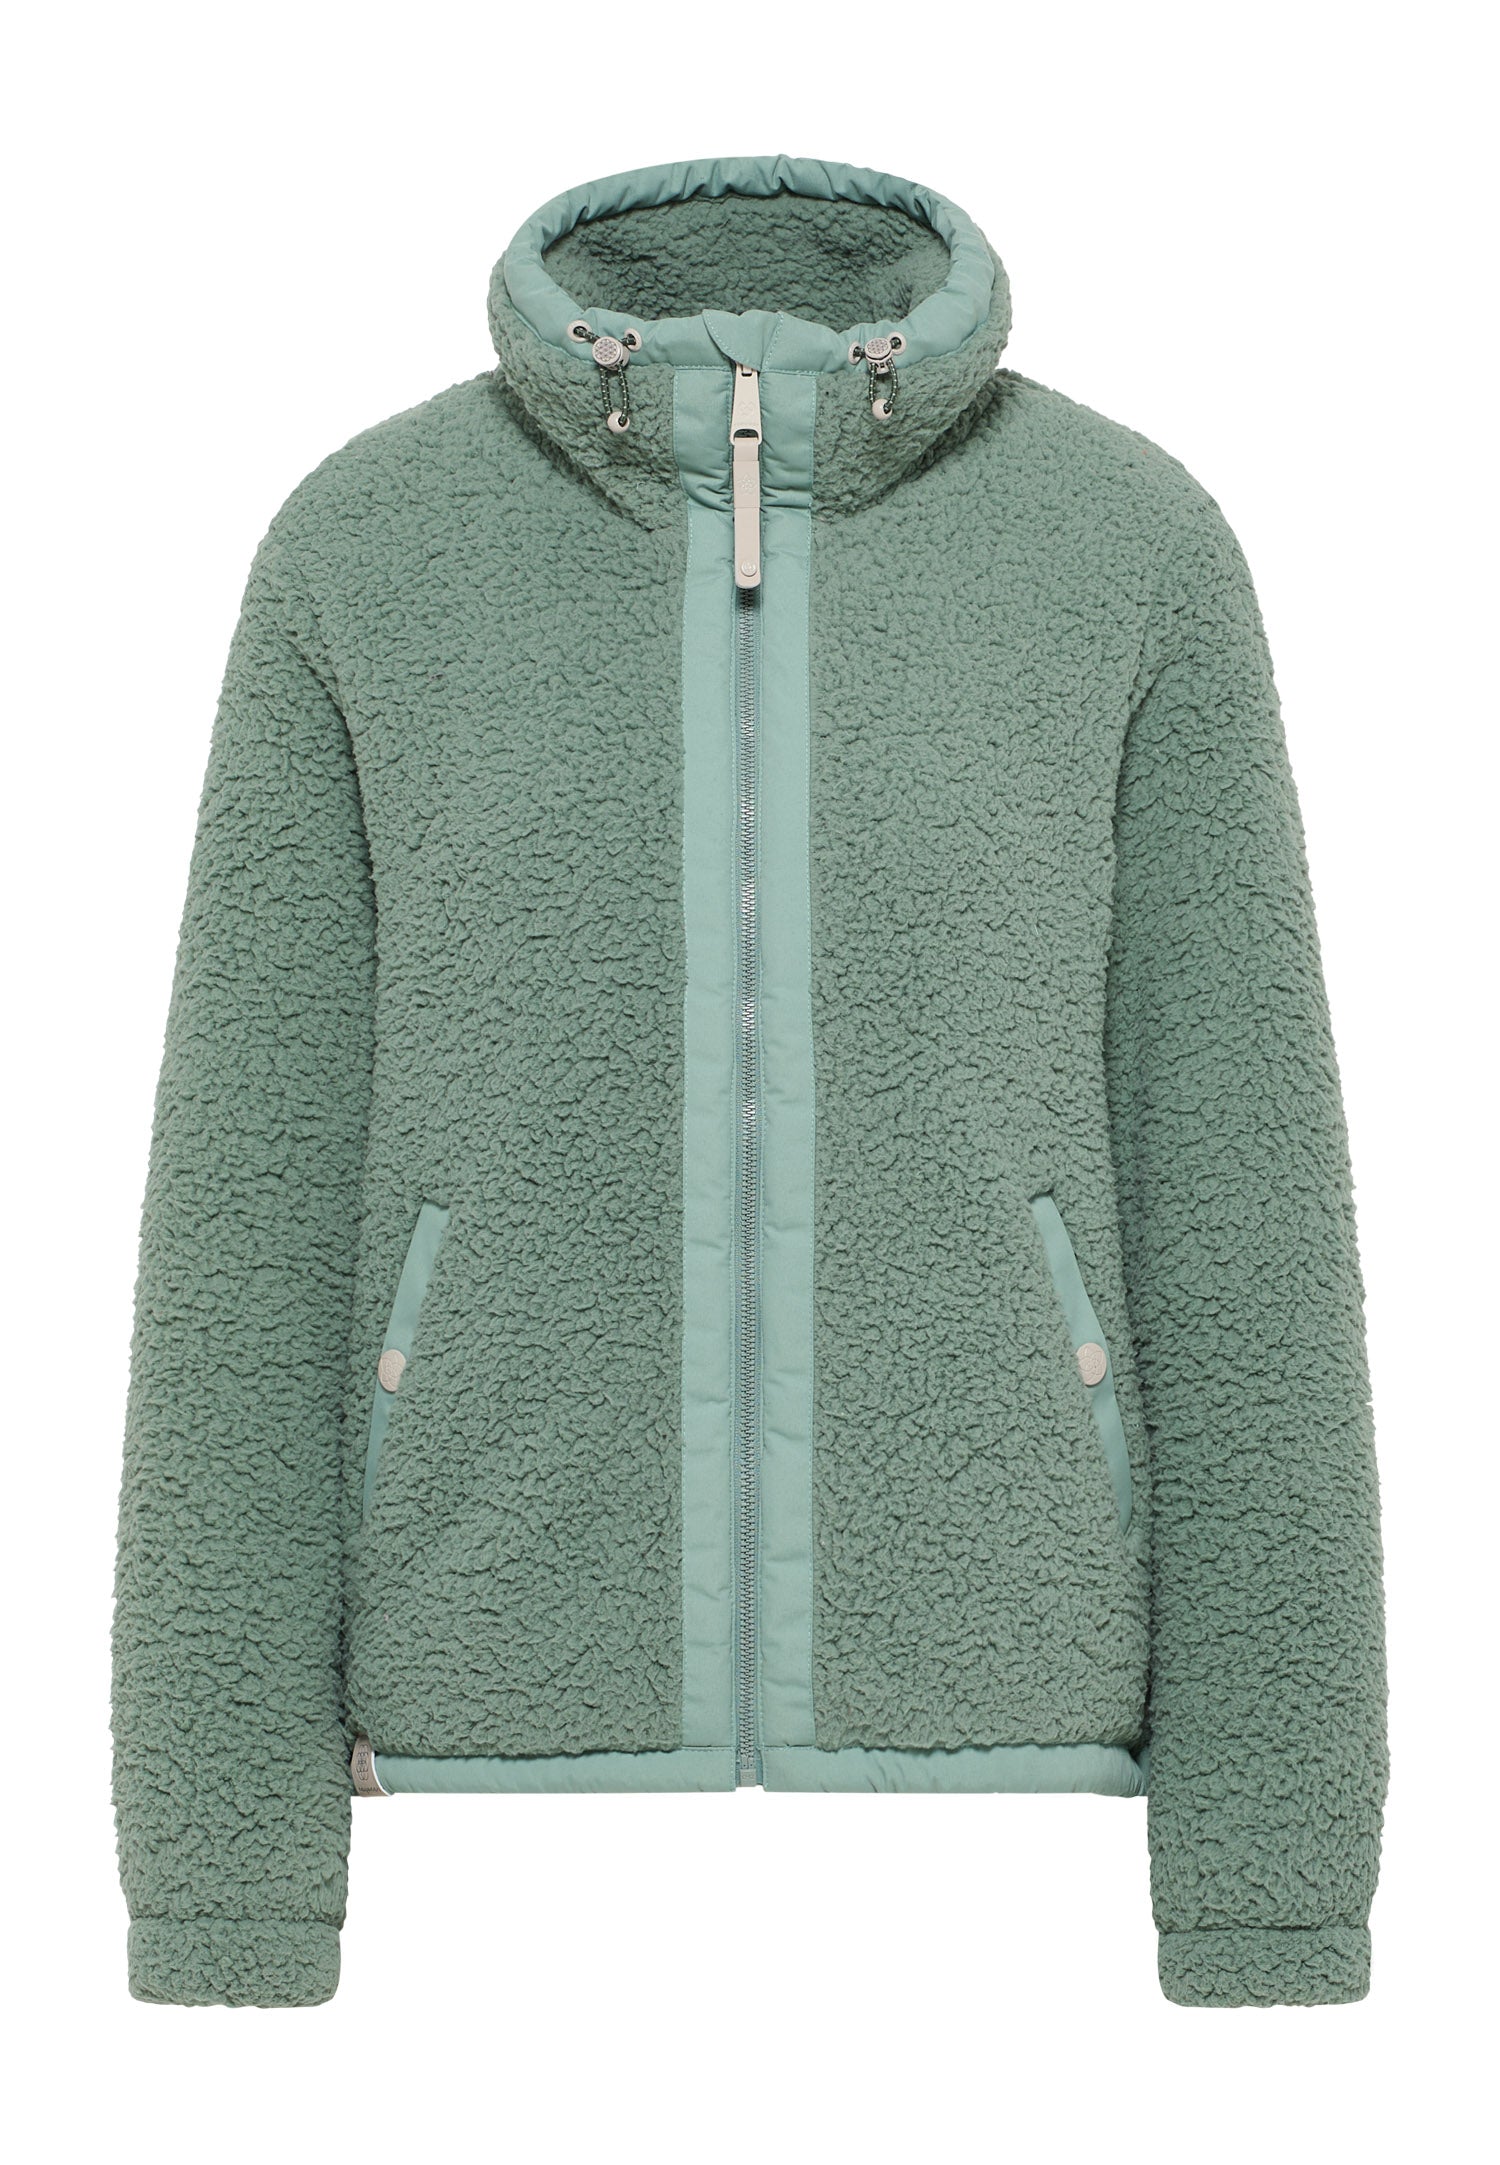 Ragwear Nordicka Zip Up Fleece | Green - Fancy That & The Roundstone